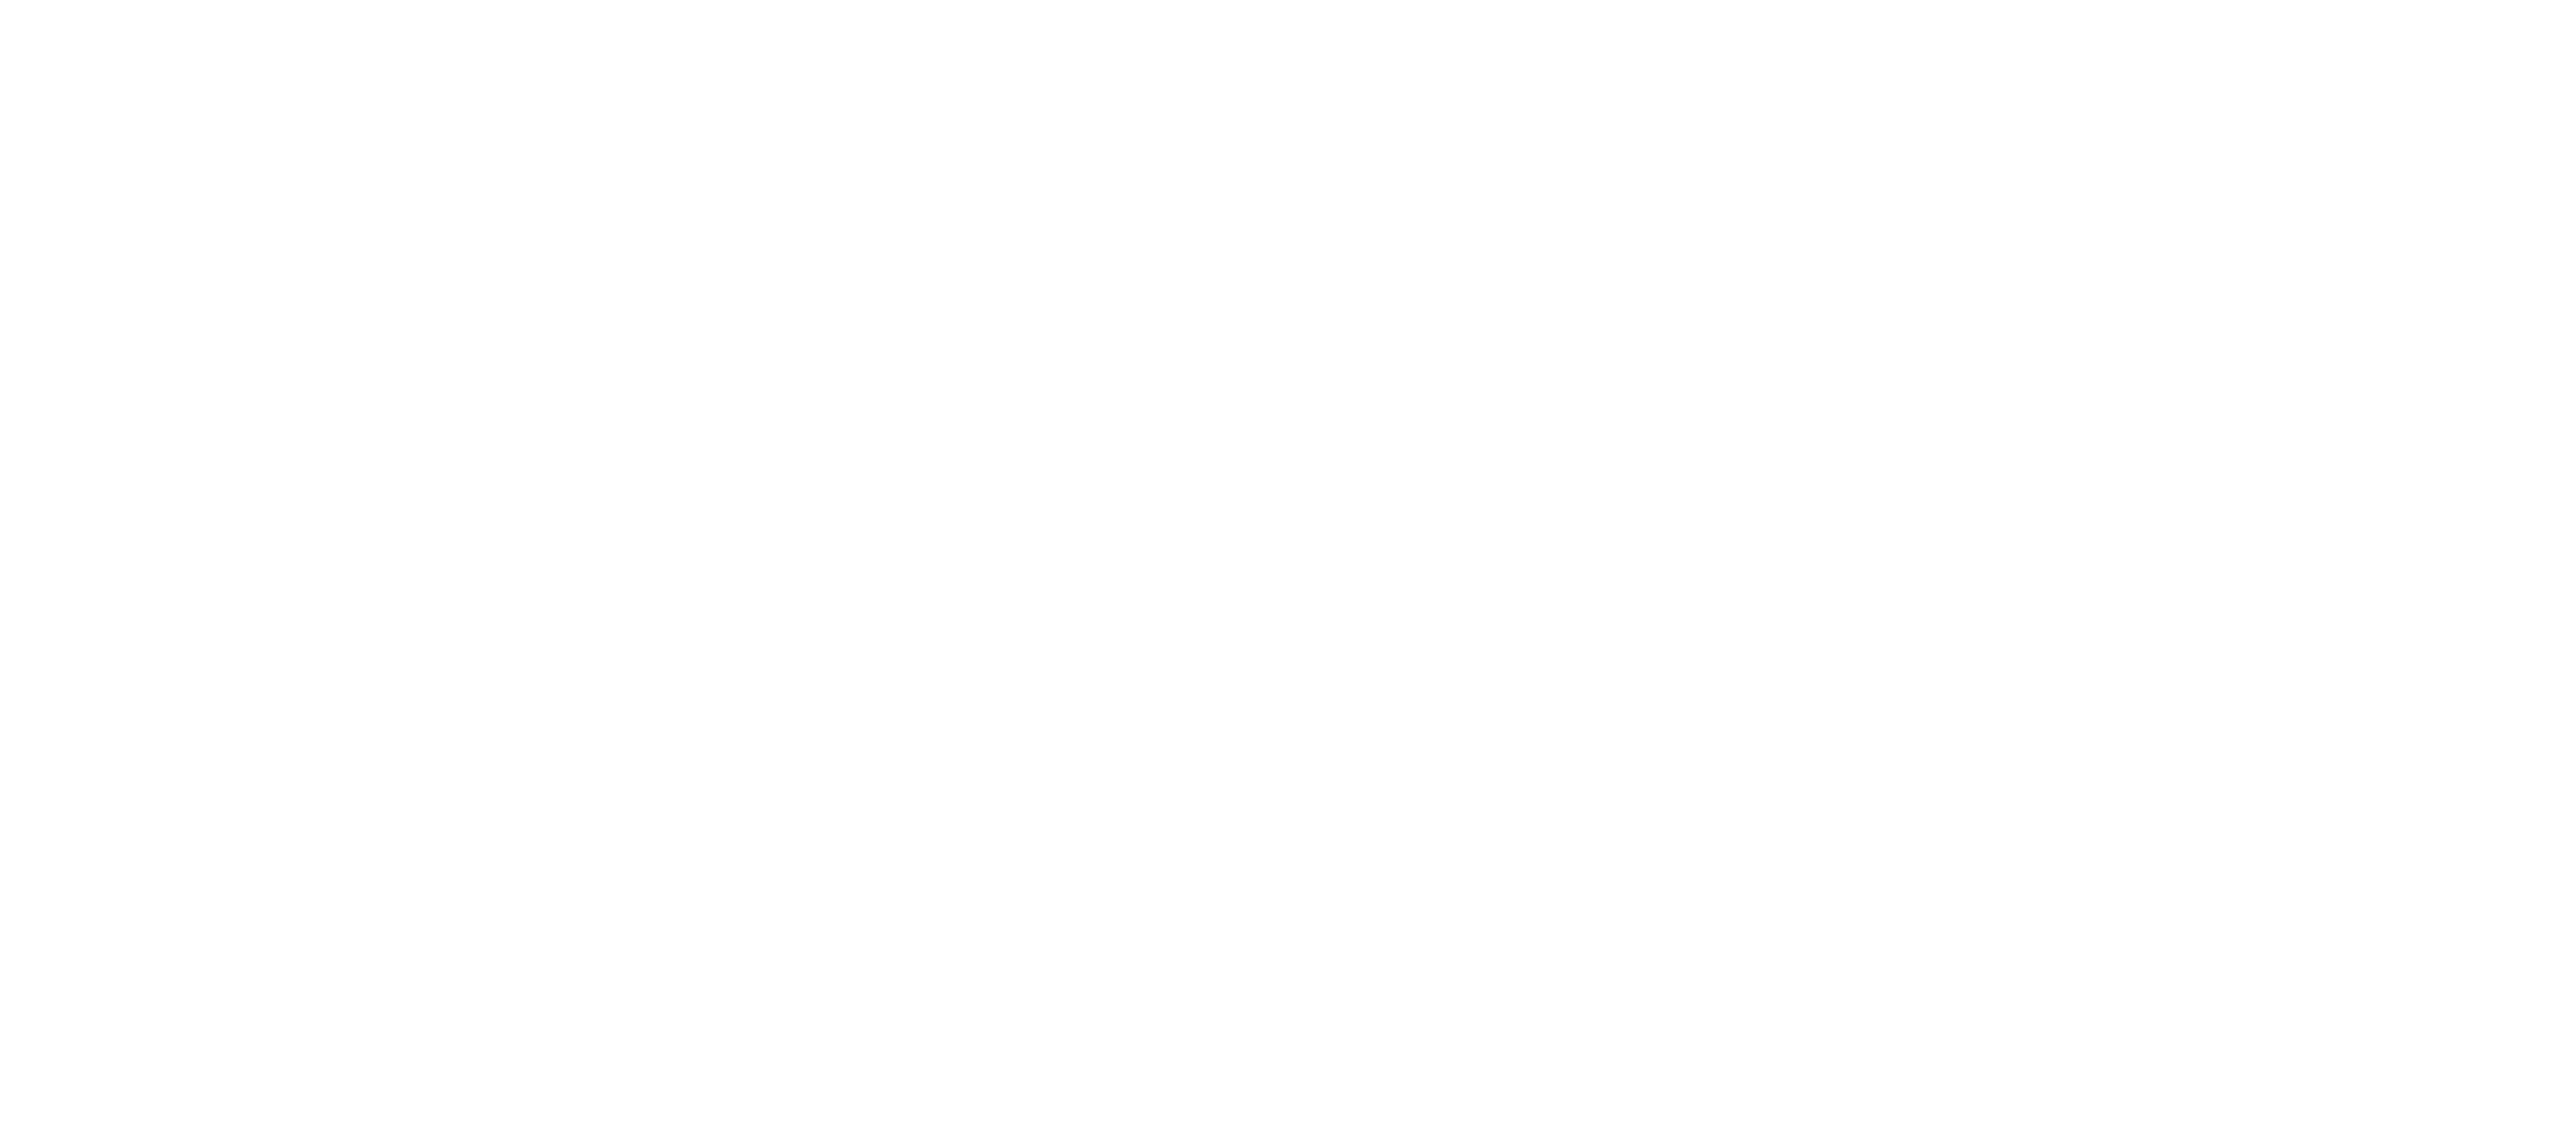 Michigan Self-service Station logo